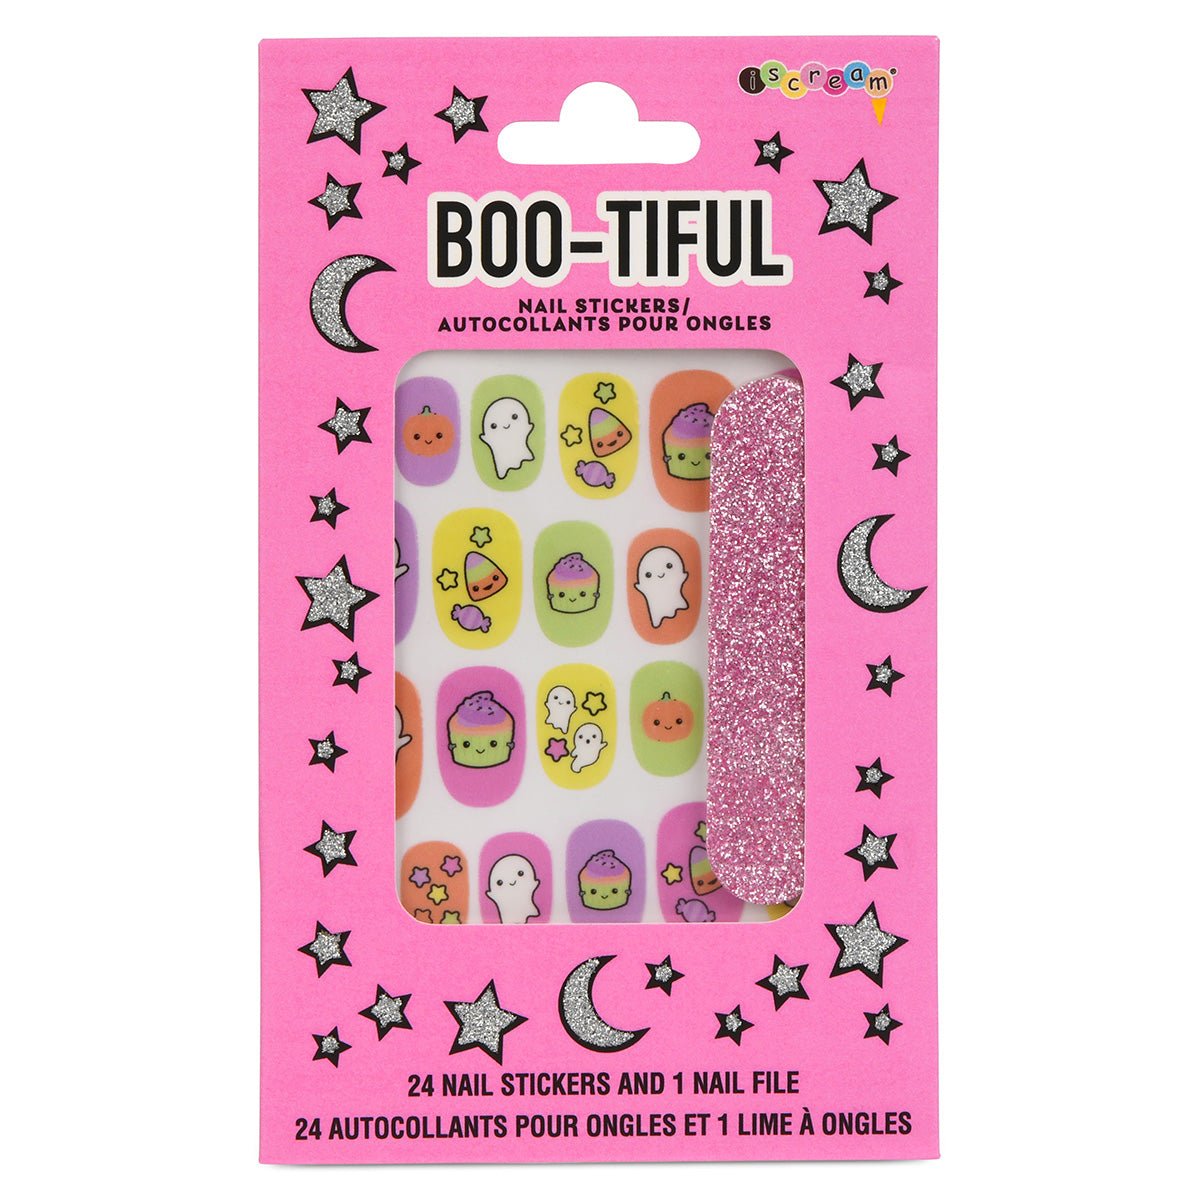 Boo-tiful Nail Stickers - Wren Harper